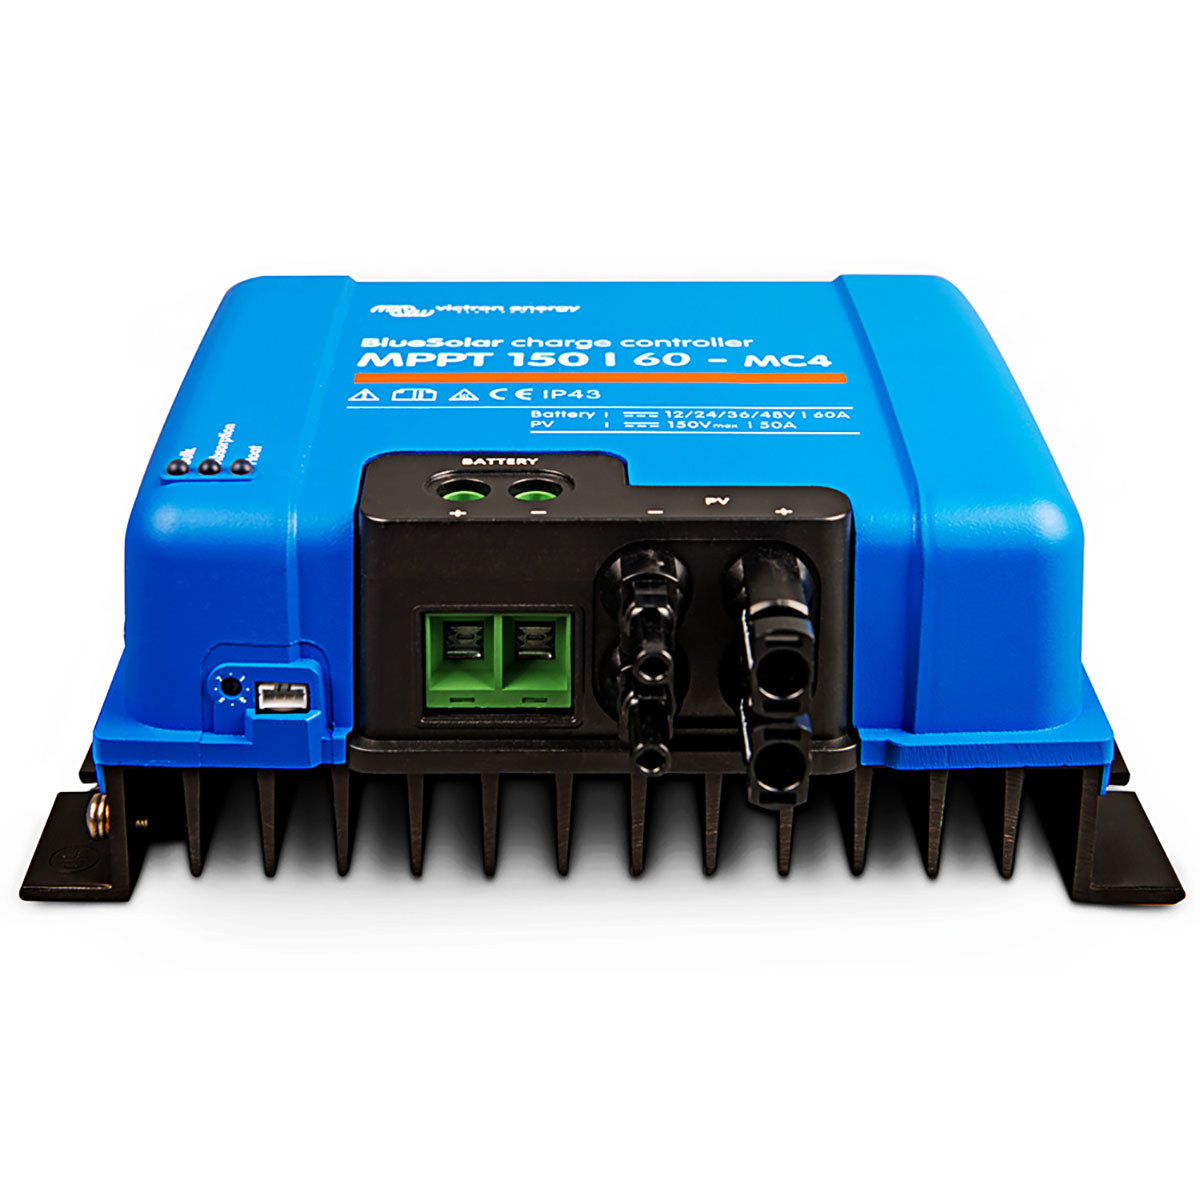 VICTRON ENERGY 150/60-MC4 Alle 24V 12V 60A Batterien, 48V Blau MPPT MPP-Tracker BlueSolar